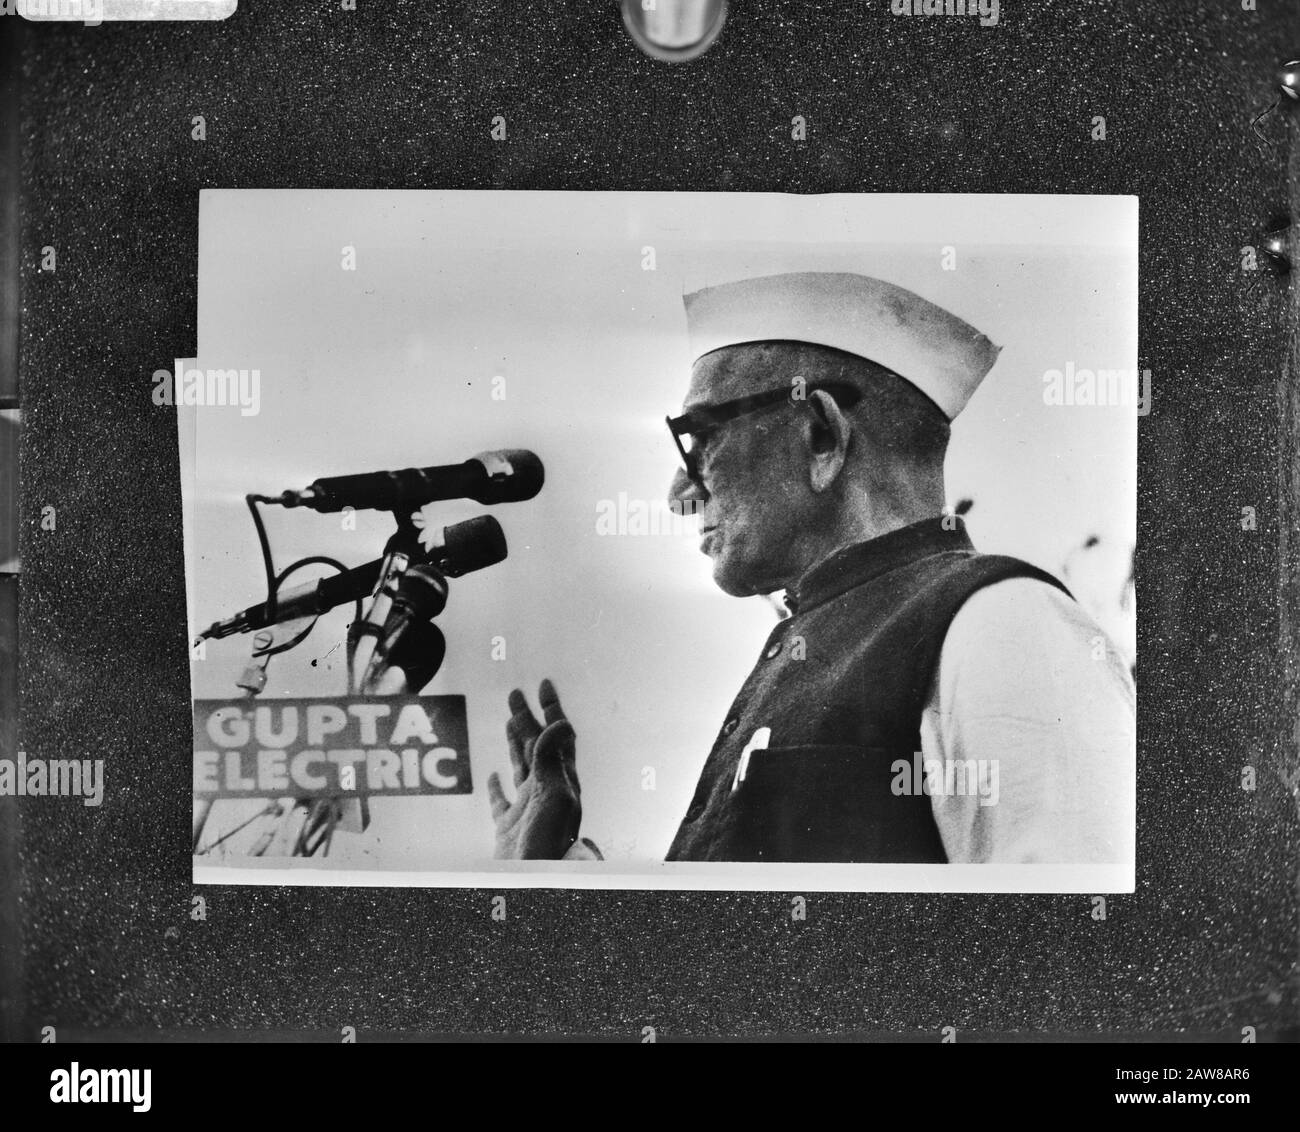 Wahlen in Indien Oppositionsführer Morarji Desai (Janata Party) Datum: 21. März 1977 Ort: Indien Stichwörter: Oppositionsführer, Politiker, Wahlen Personenname: Desai, Morarji Stockfoto